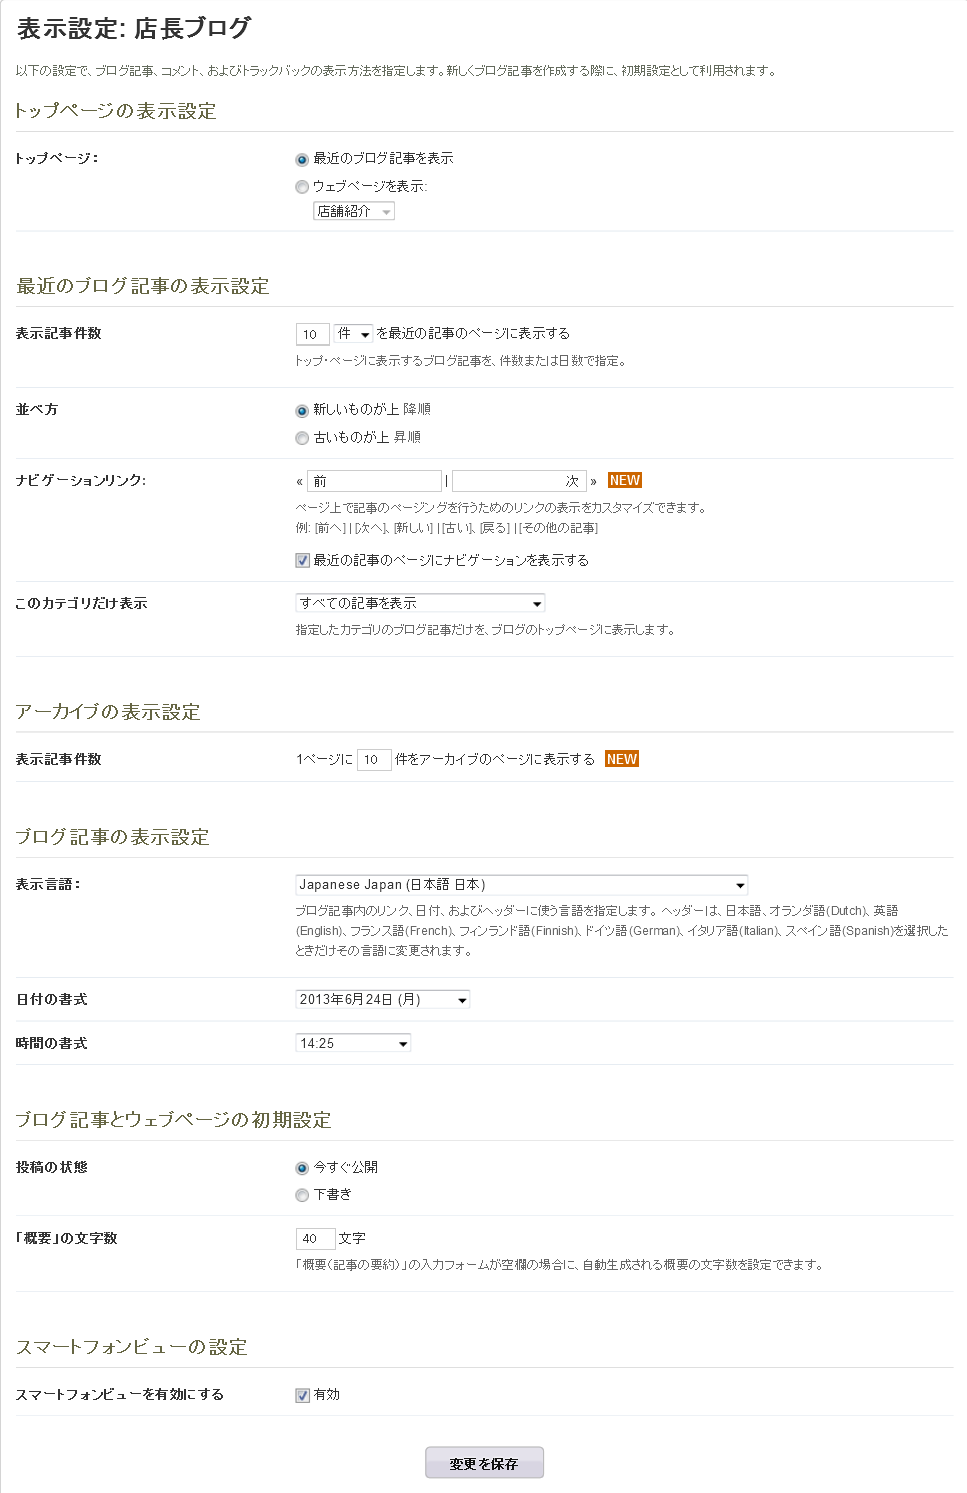 https://www.sixapart.jp/lekumo/bb/support/images/display_blog01.png